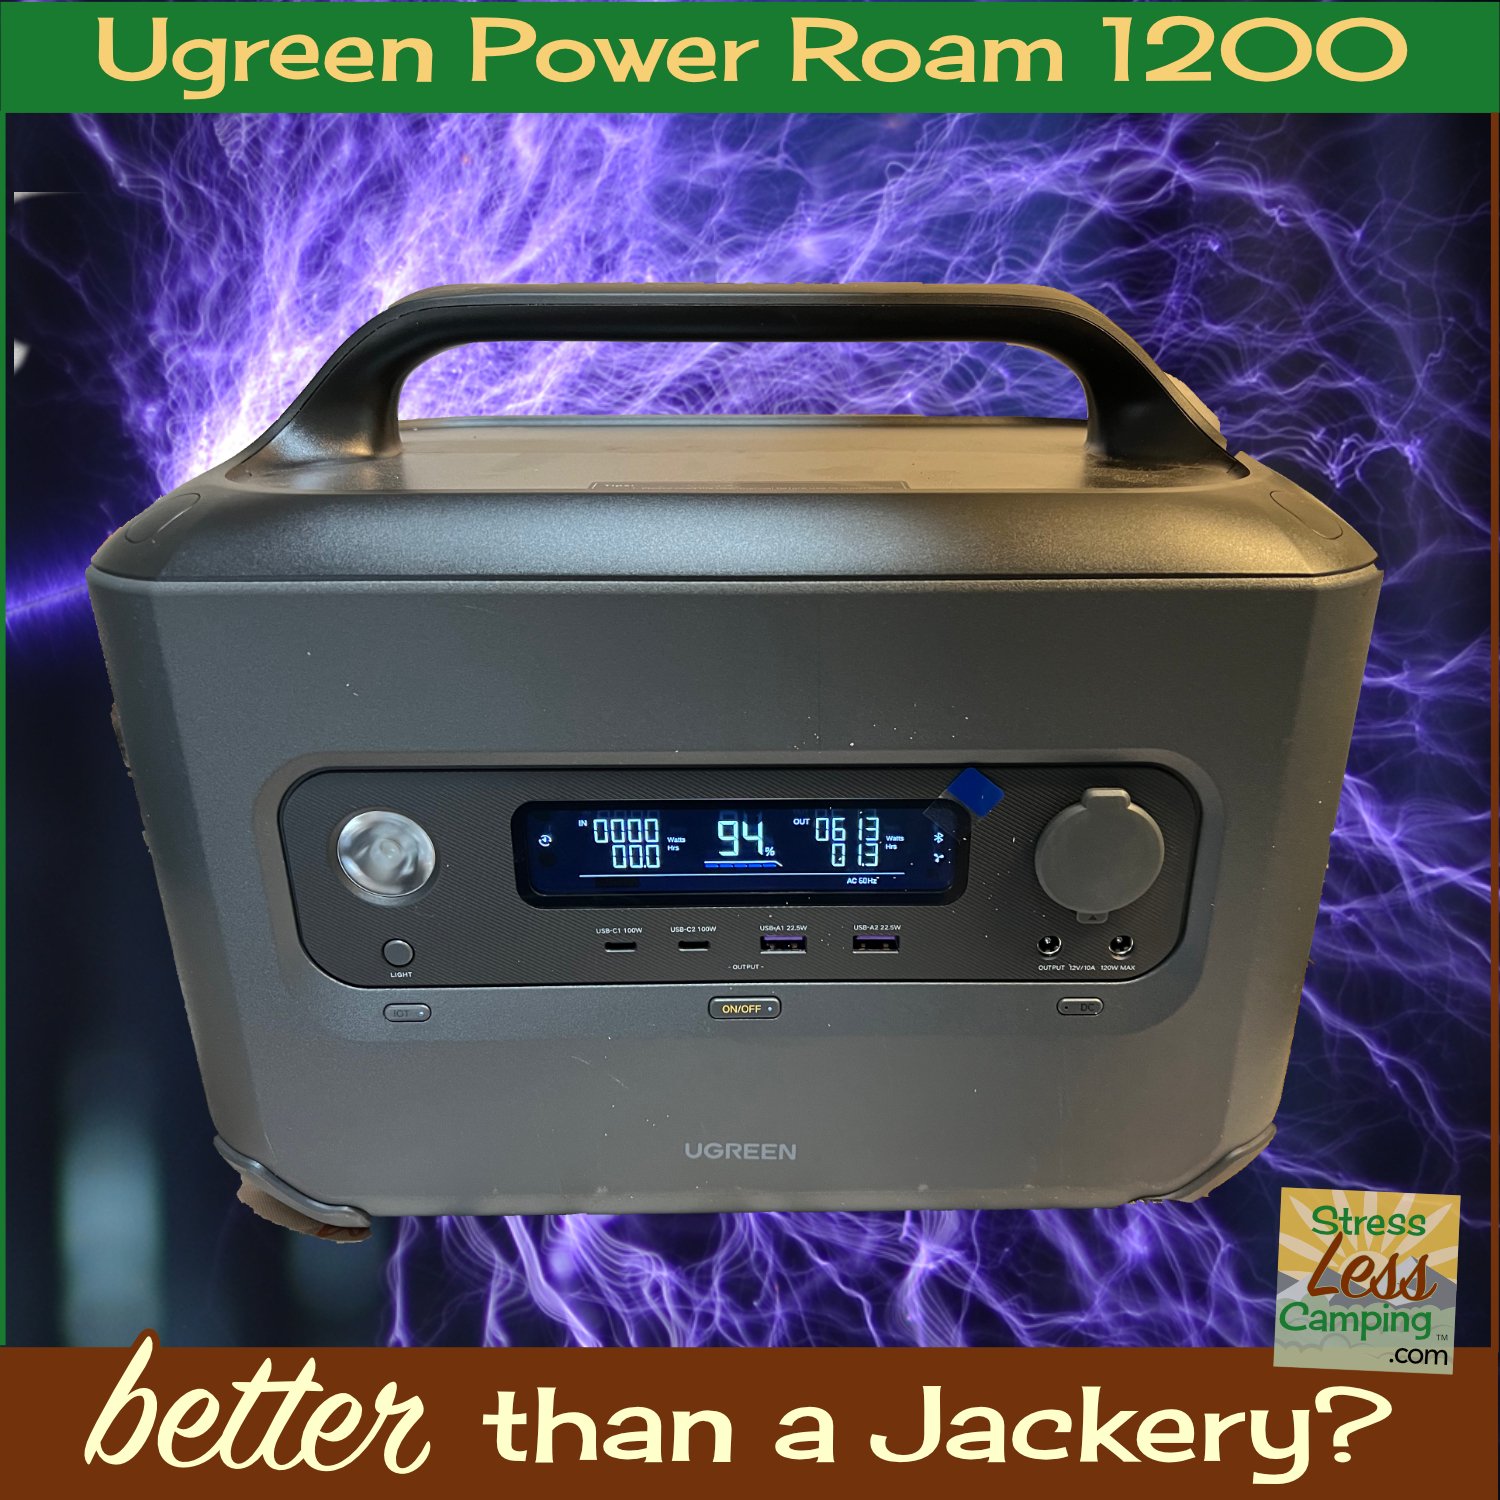 Ugreen Power Roam 1200 - Jackery killer?